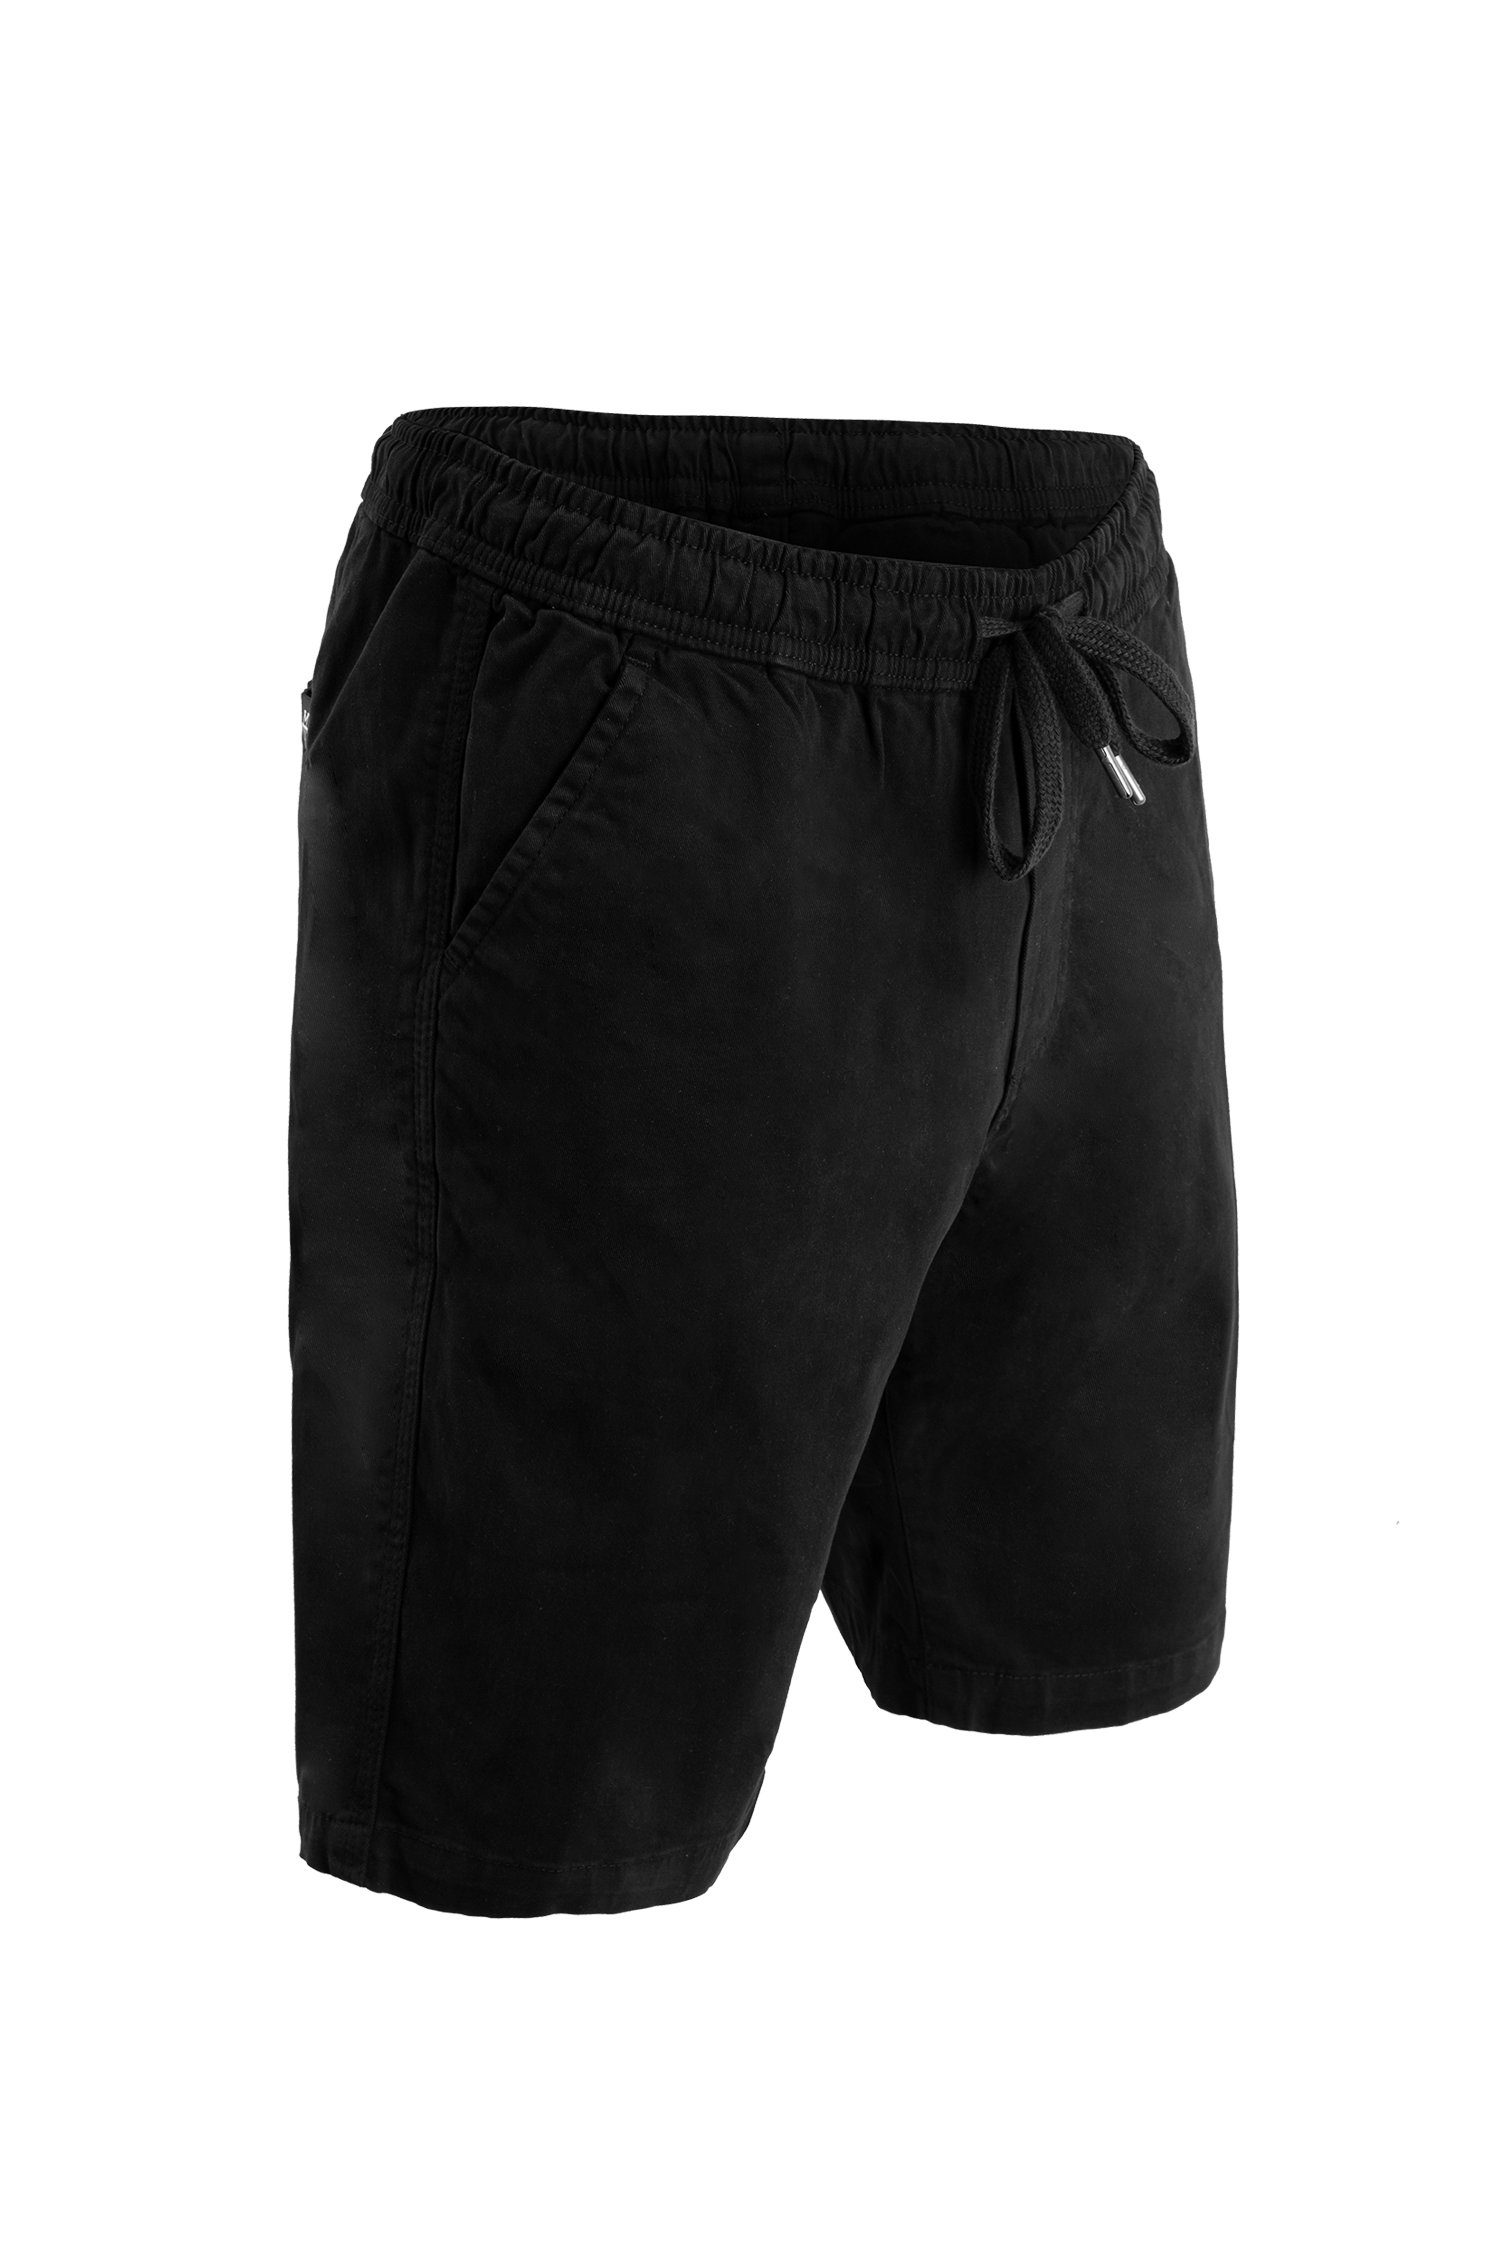 Manufaktur13 - Kurze Black aus Chino Chinoshorts dehnbarem Stretch Shorts mit Twill Hose Kordelzug / Tunnelzug